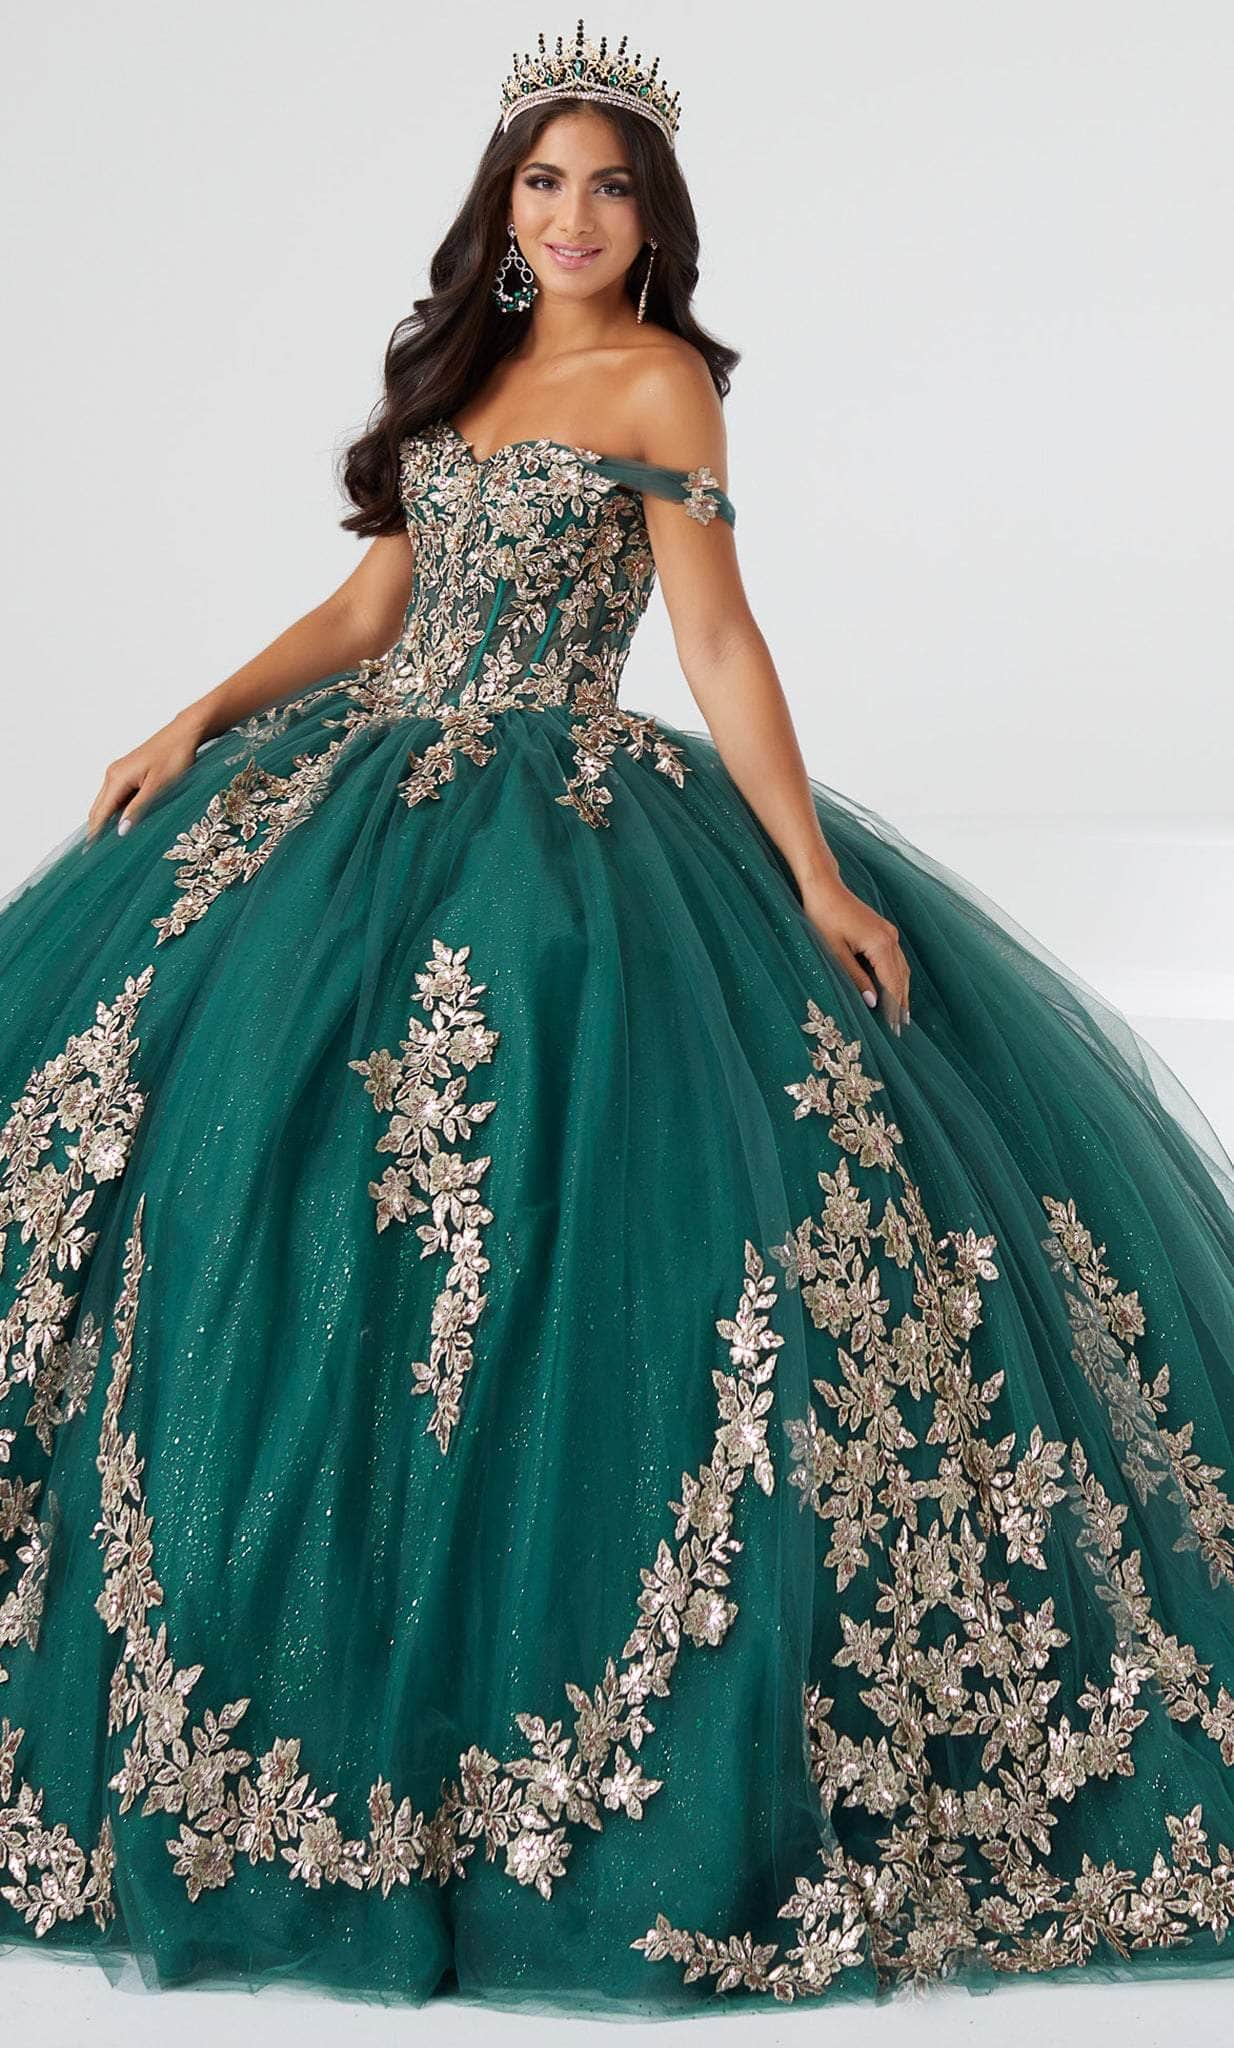 Fiesta Gowns 56461 - Floral Appliqued Quinceanera Dress
